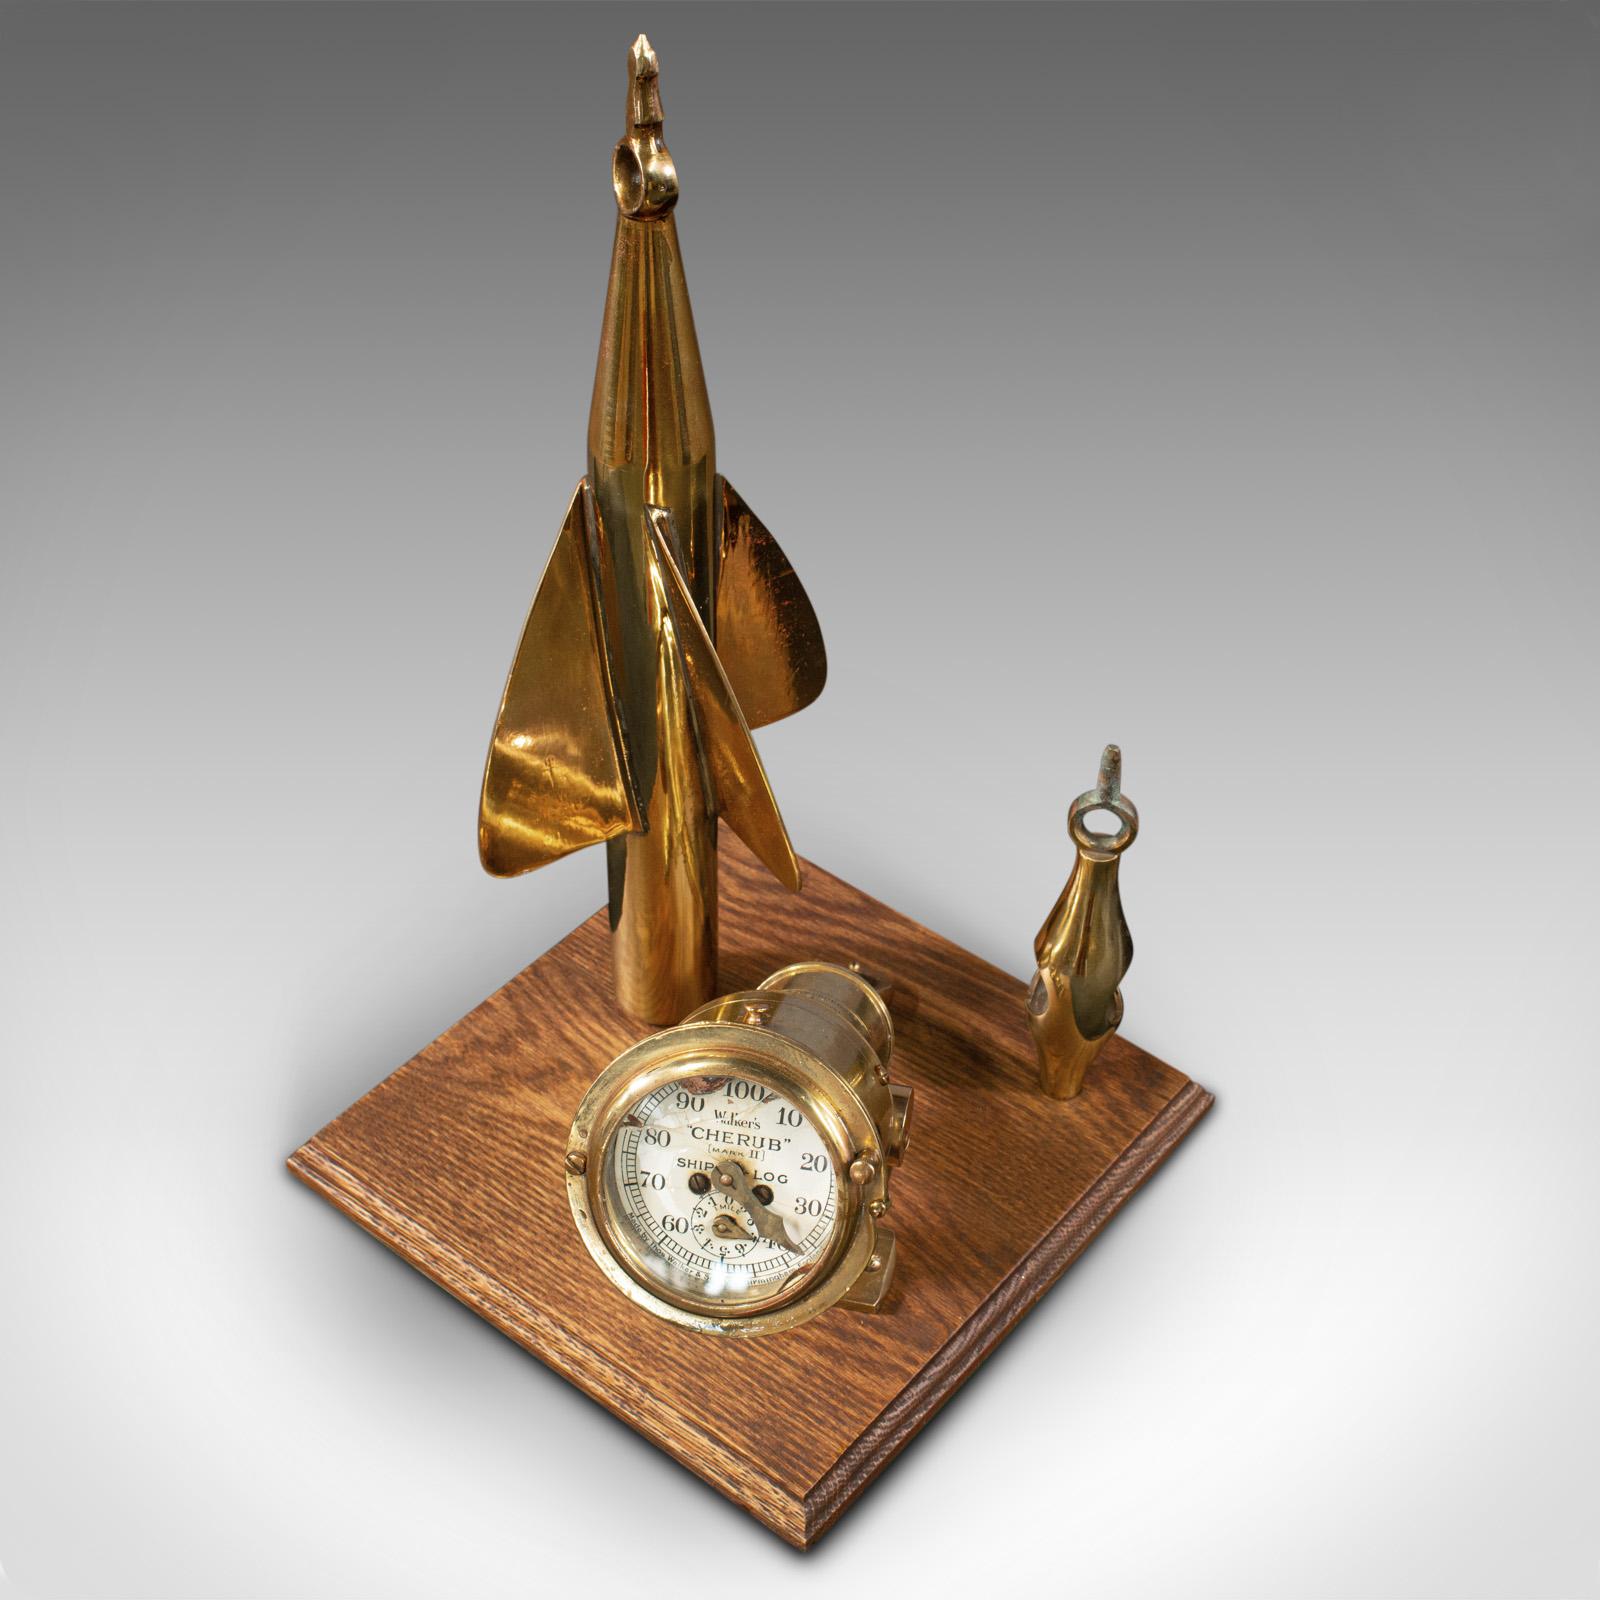 20th Century Antique Ship's Log Desk Ornament, English, Brass, Maritime Instrument, C.1920